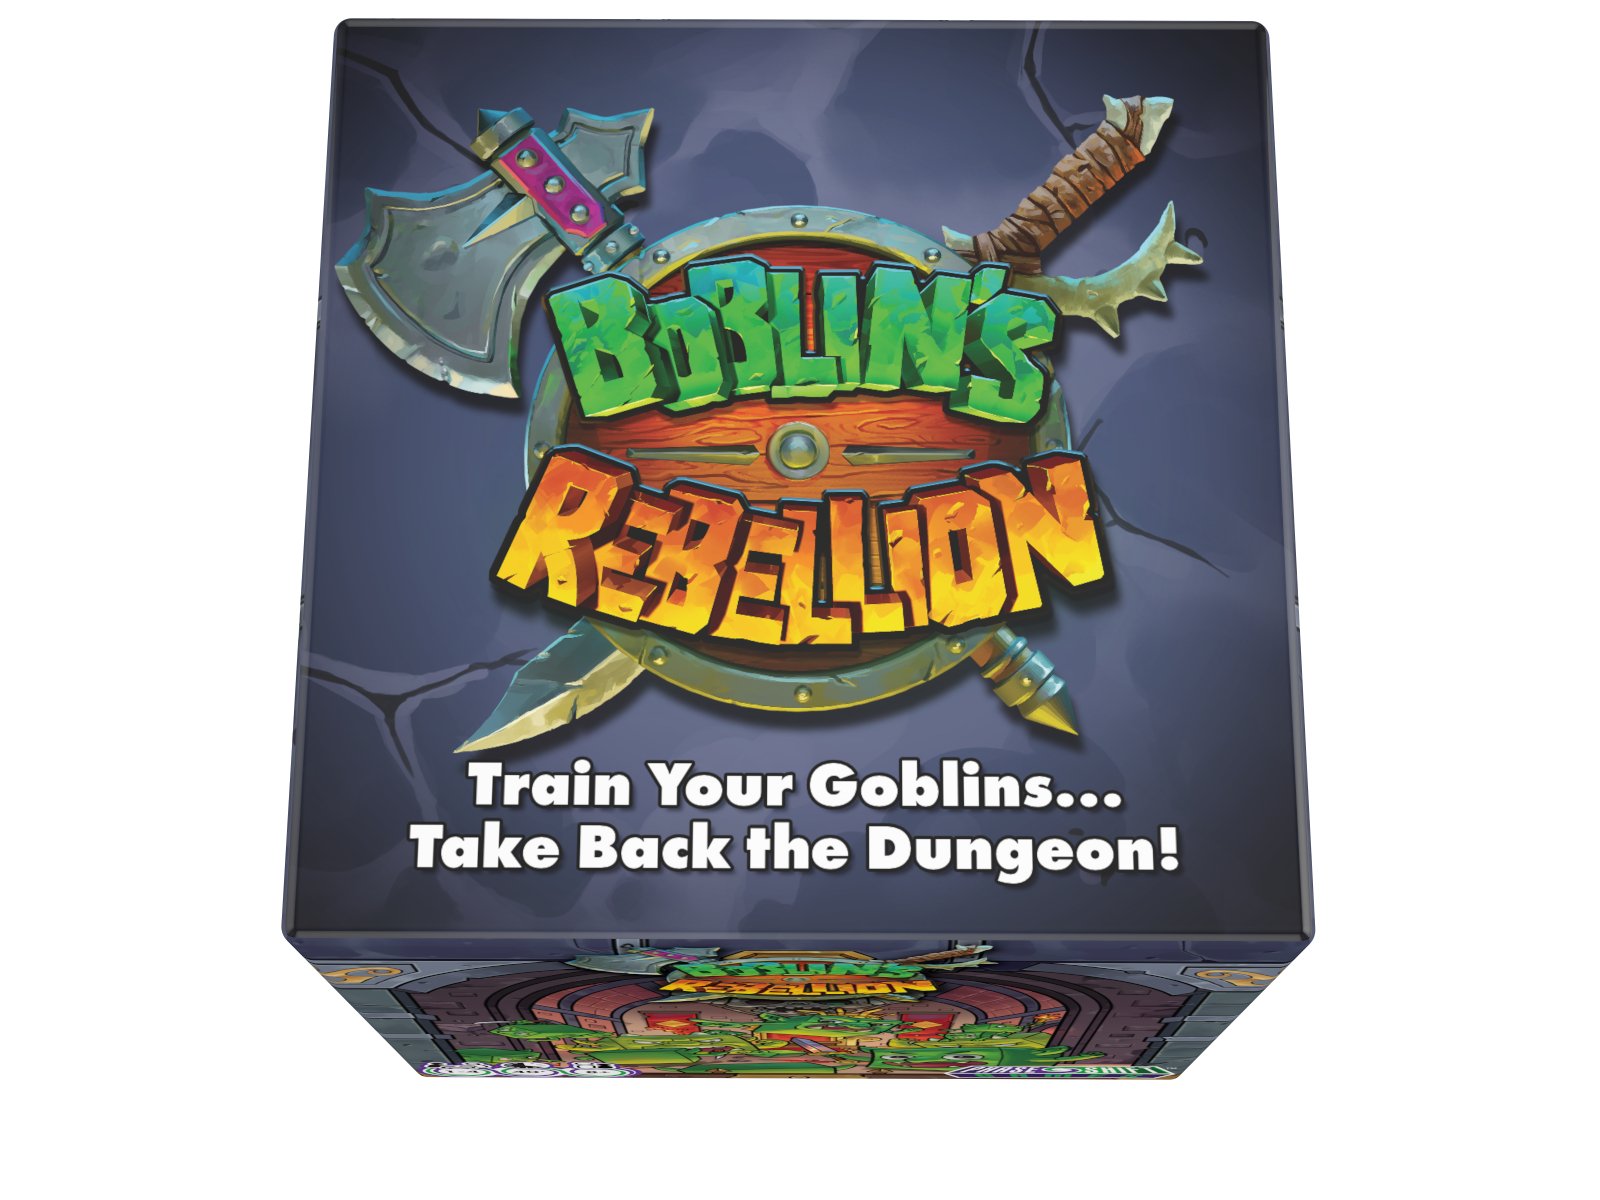 Boblin's Rebellion - Phase Shift Games